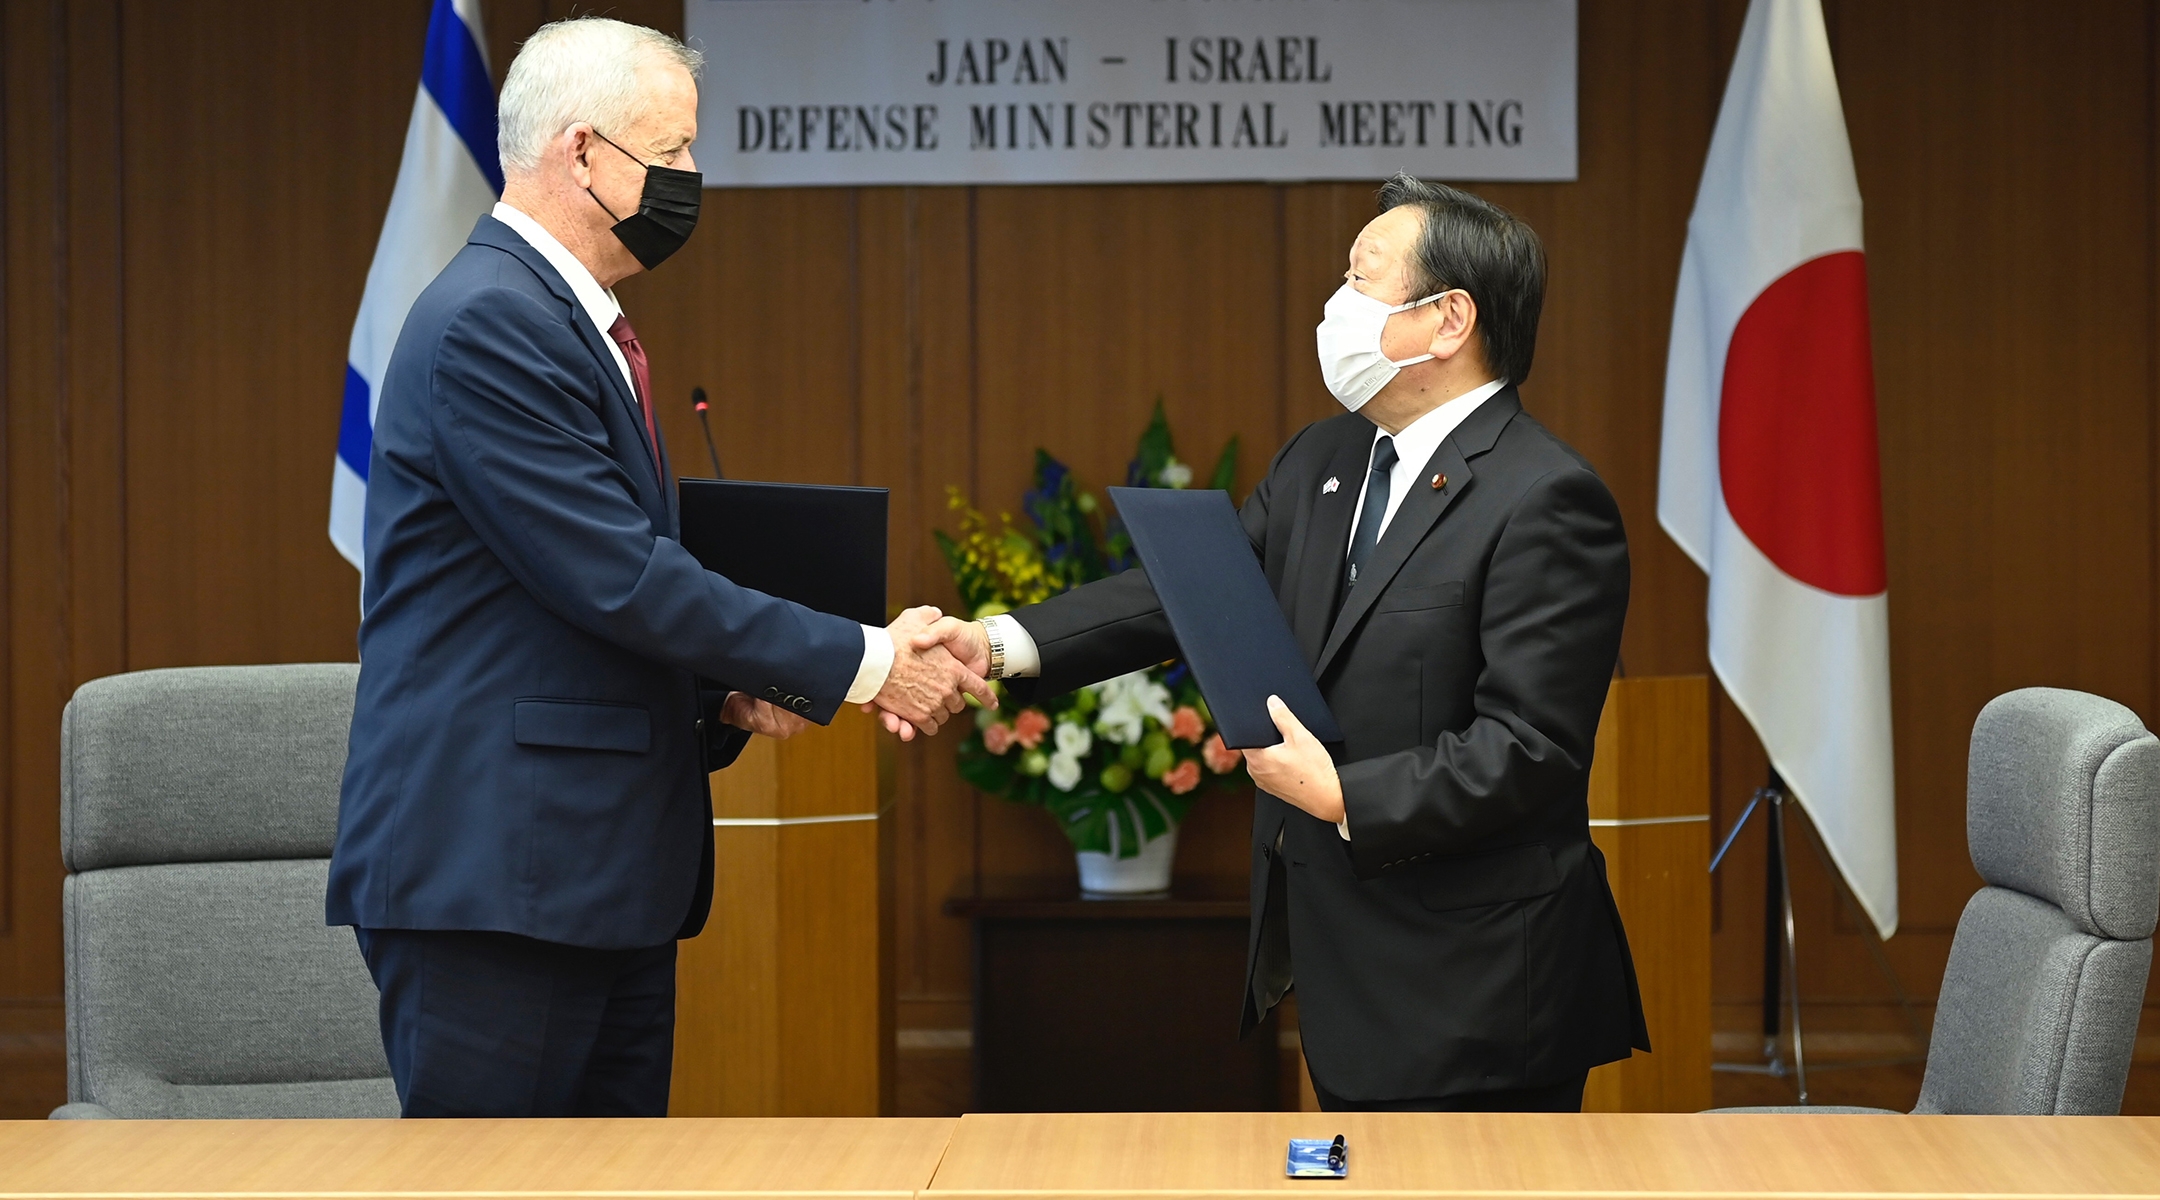 Israeli Defense Minister Benny Gantz, left, and Japanese Defense Minister Hamada Yasukazu shake hands after signing a defense memorandum in Tokyo, Aug. 30, 2022. (David Mareuil/Anadolu Agency via Getty Images)